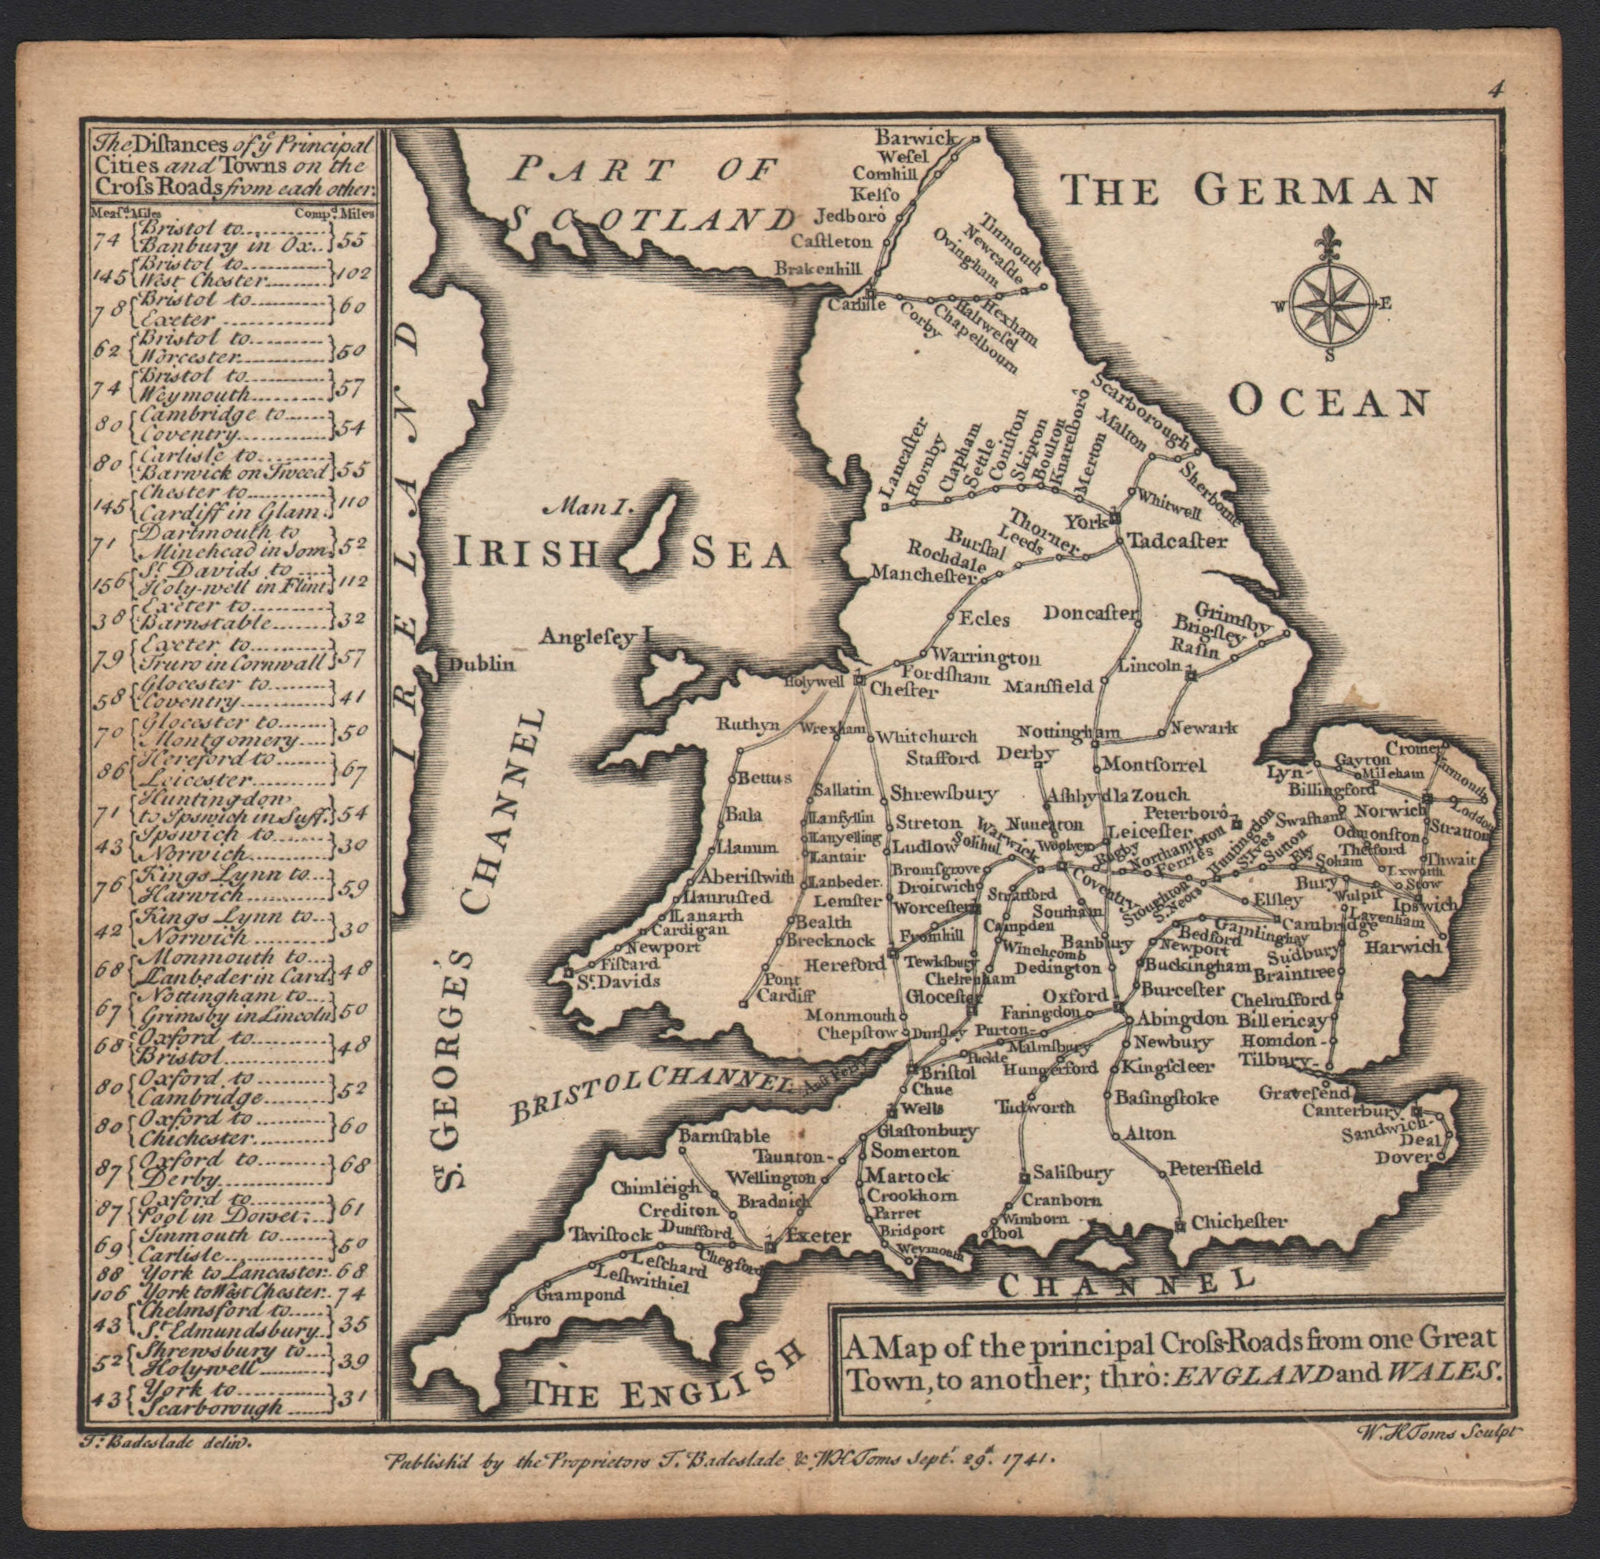 "The principal cross-roads…thro England & Wales". Badeslade & Toms 1742 map